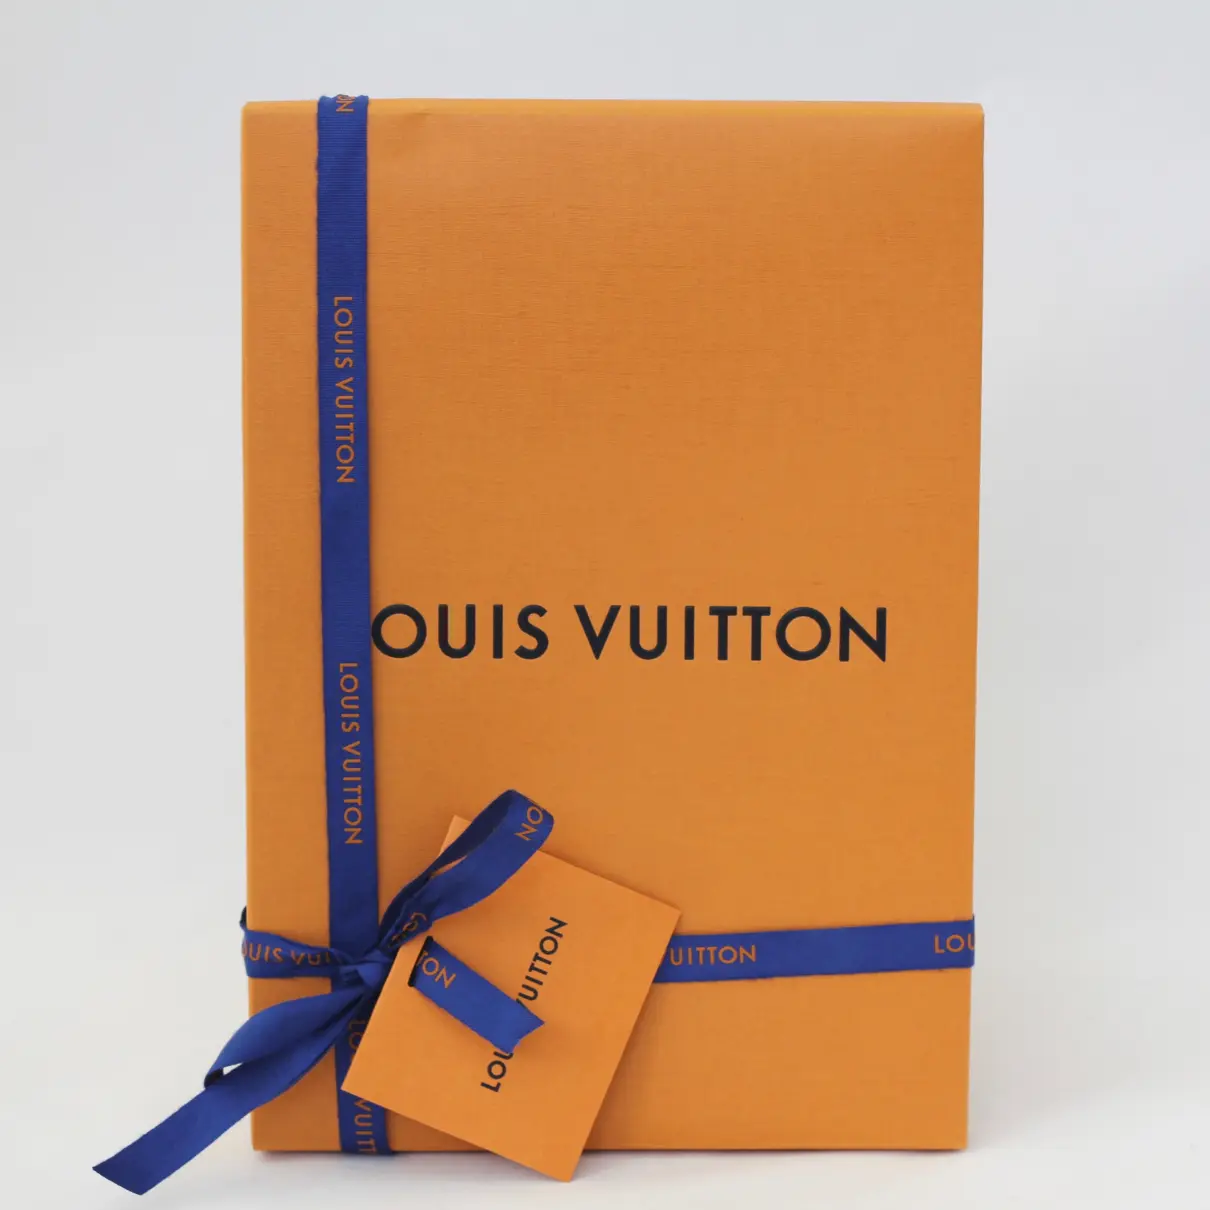 Buy Louis Vuitton Fashion online